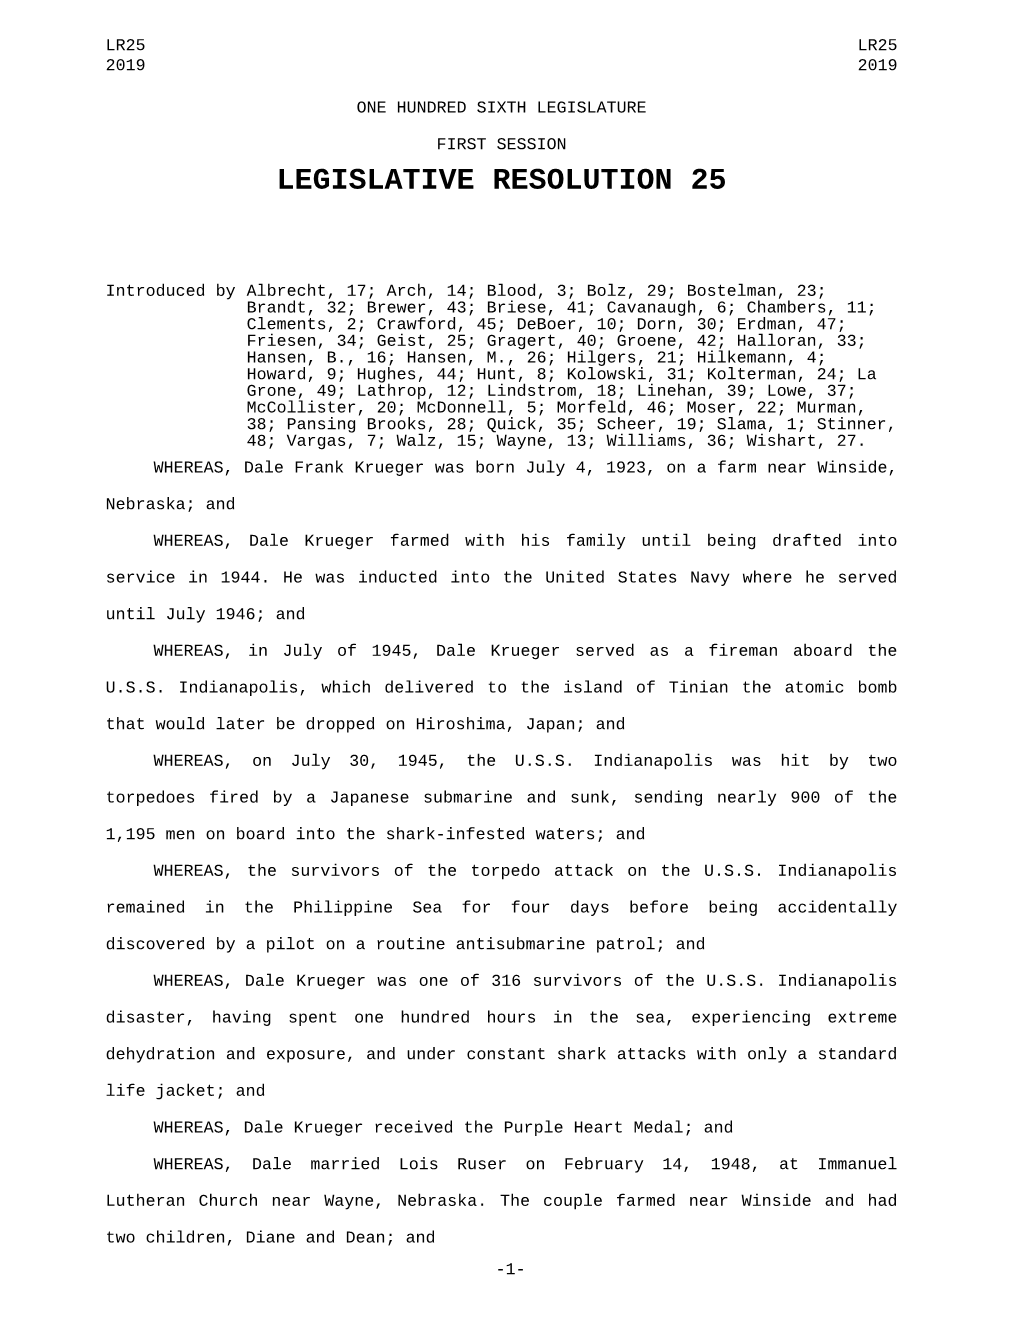 Legislative Resolution 25